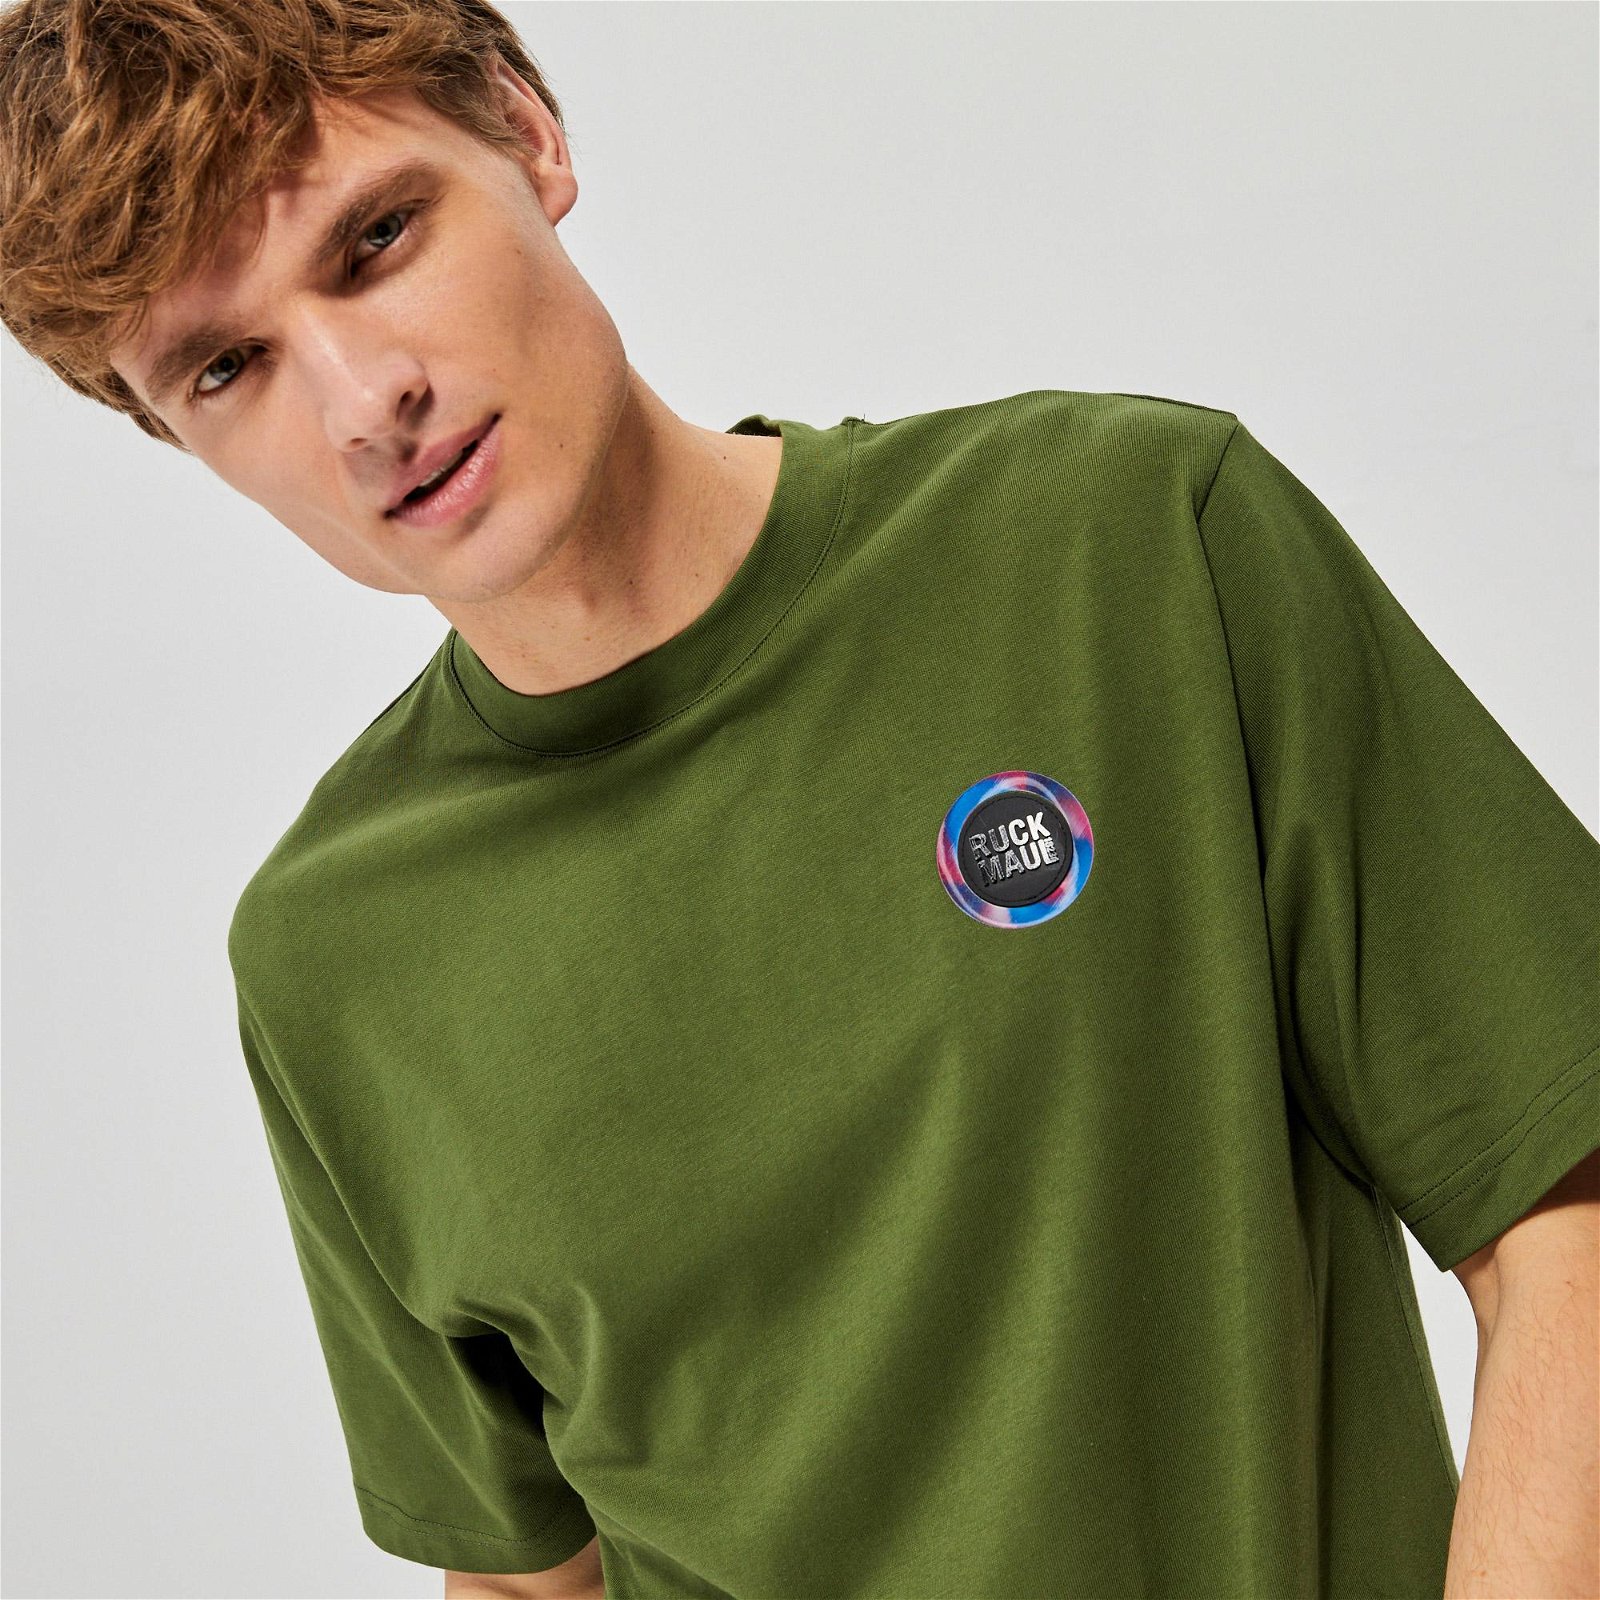 Ruck&Maul Casual Sportswear Erkek Yeşil T-Shirt